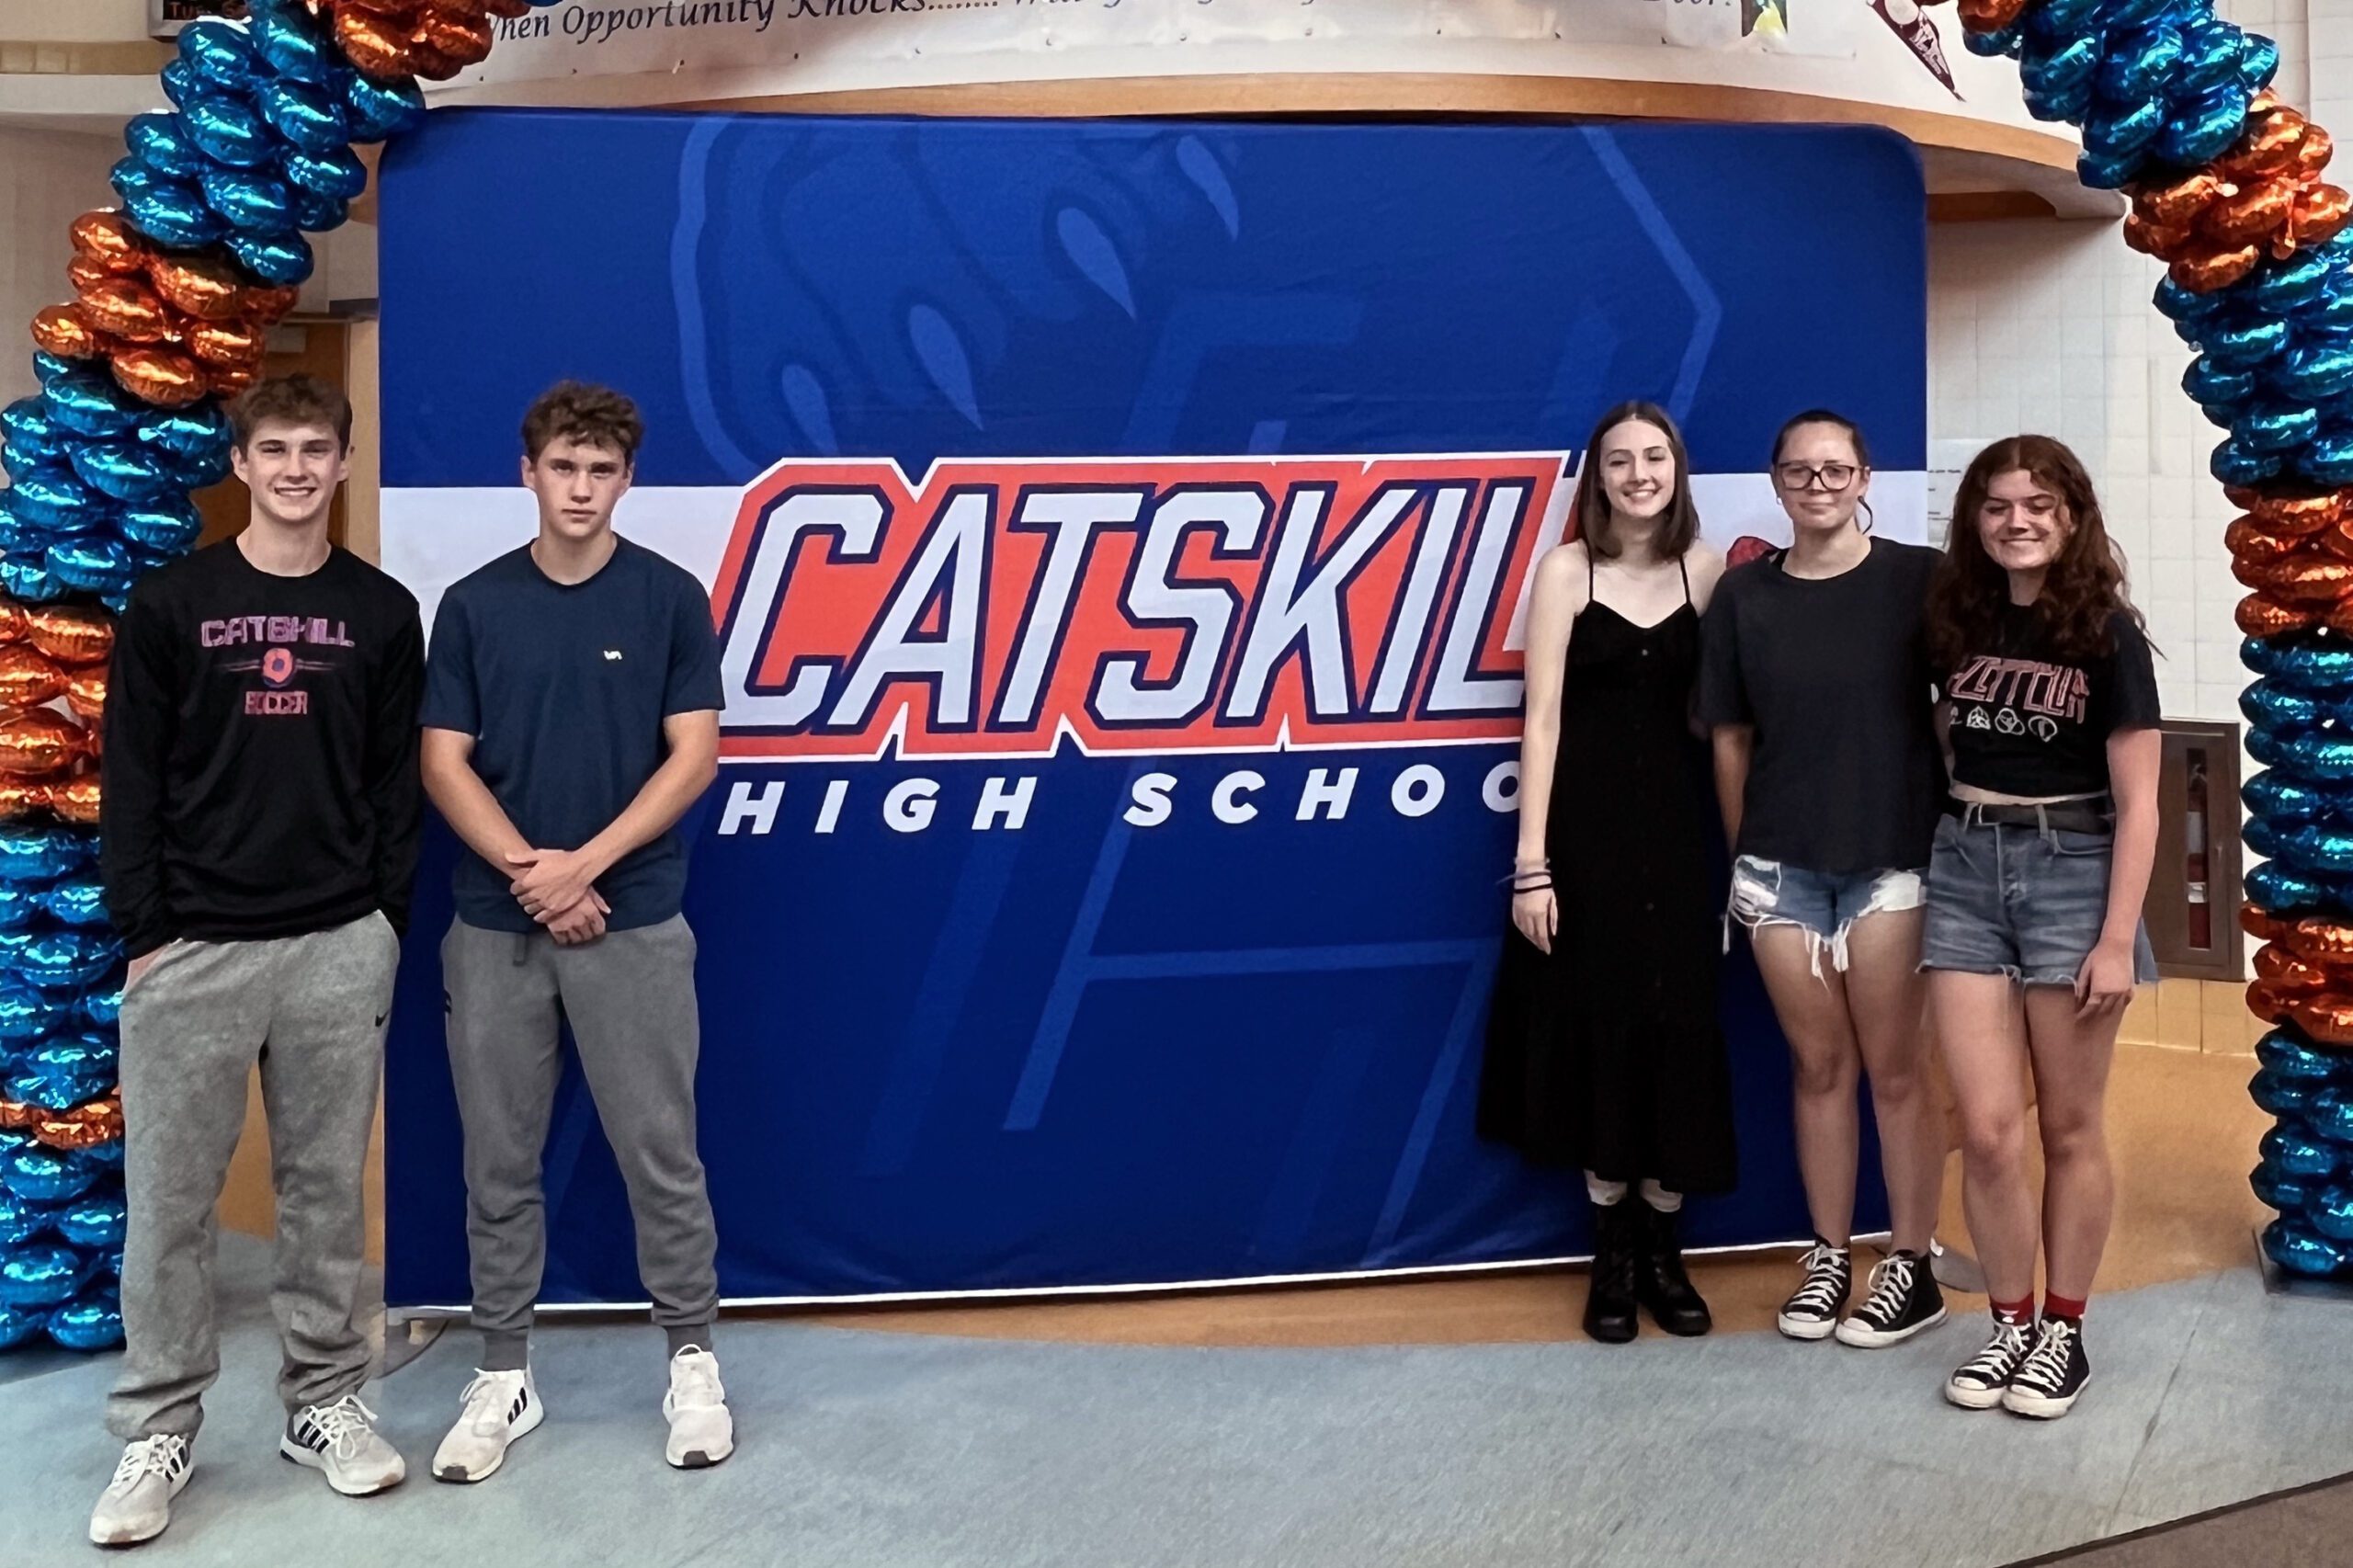 two boys and three girls of high school age standing next yo Catskill High School banner.